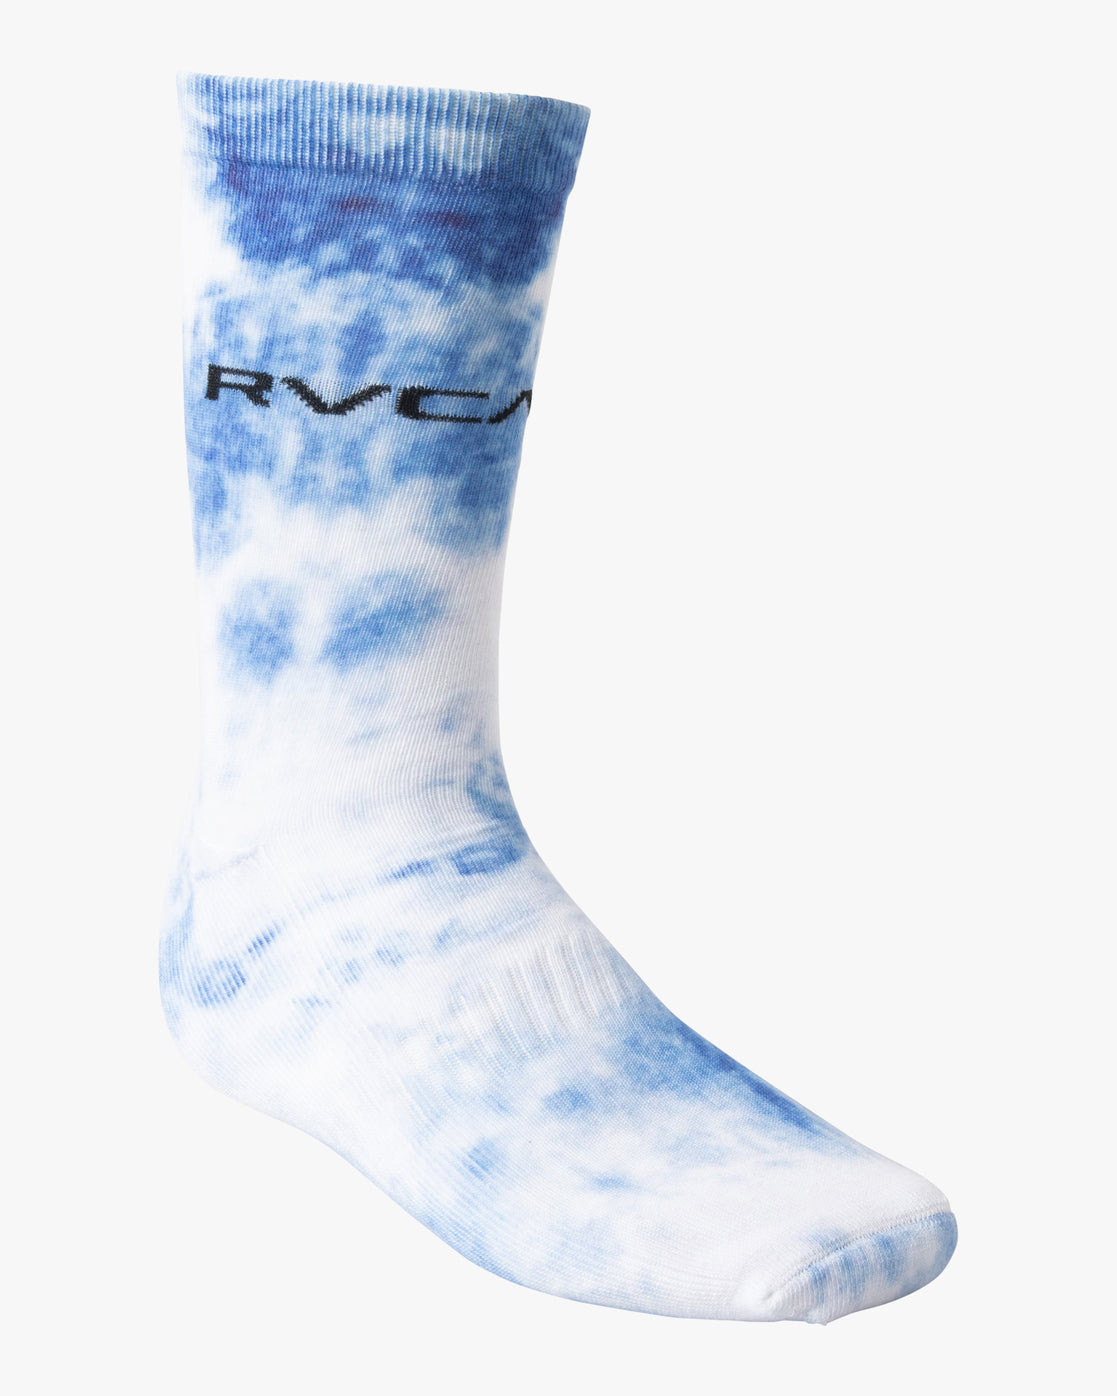 RVCA Tie Dye FB Crew Socks Two Pack Blue Front Foot